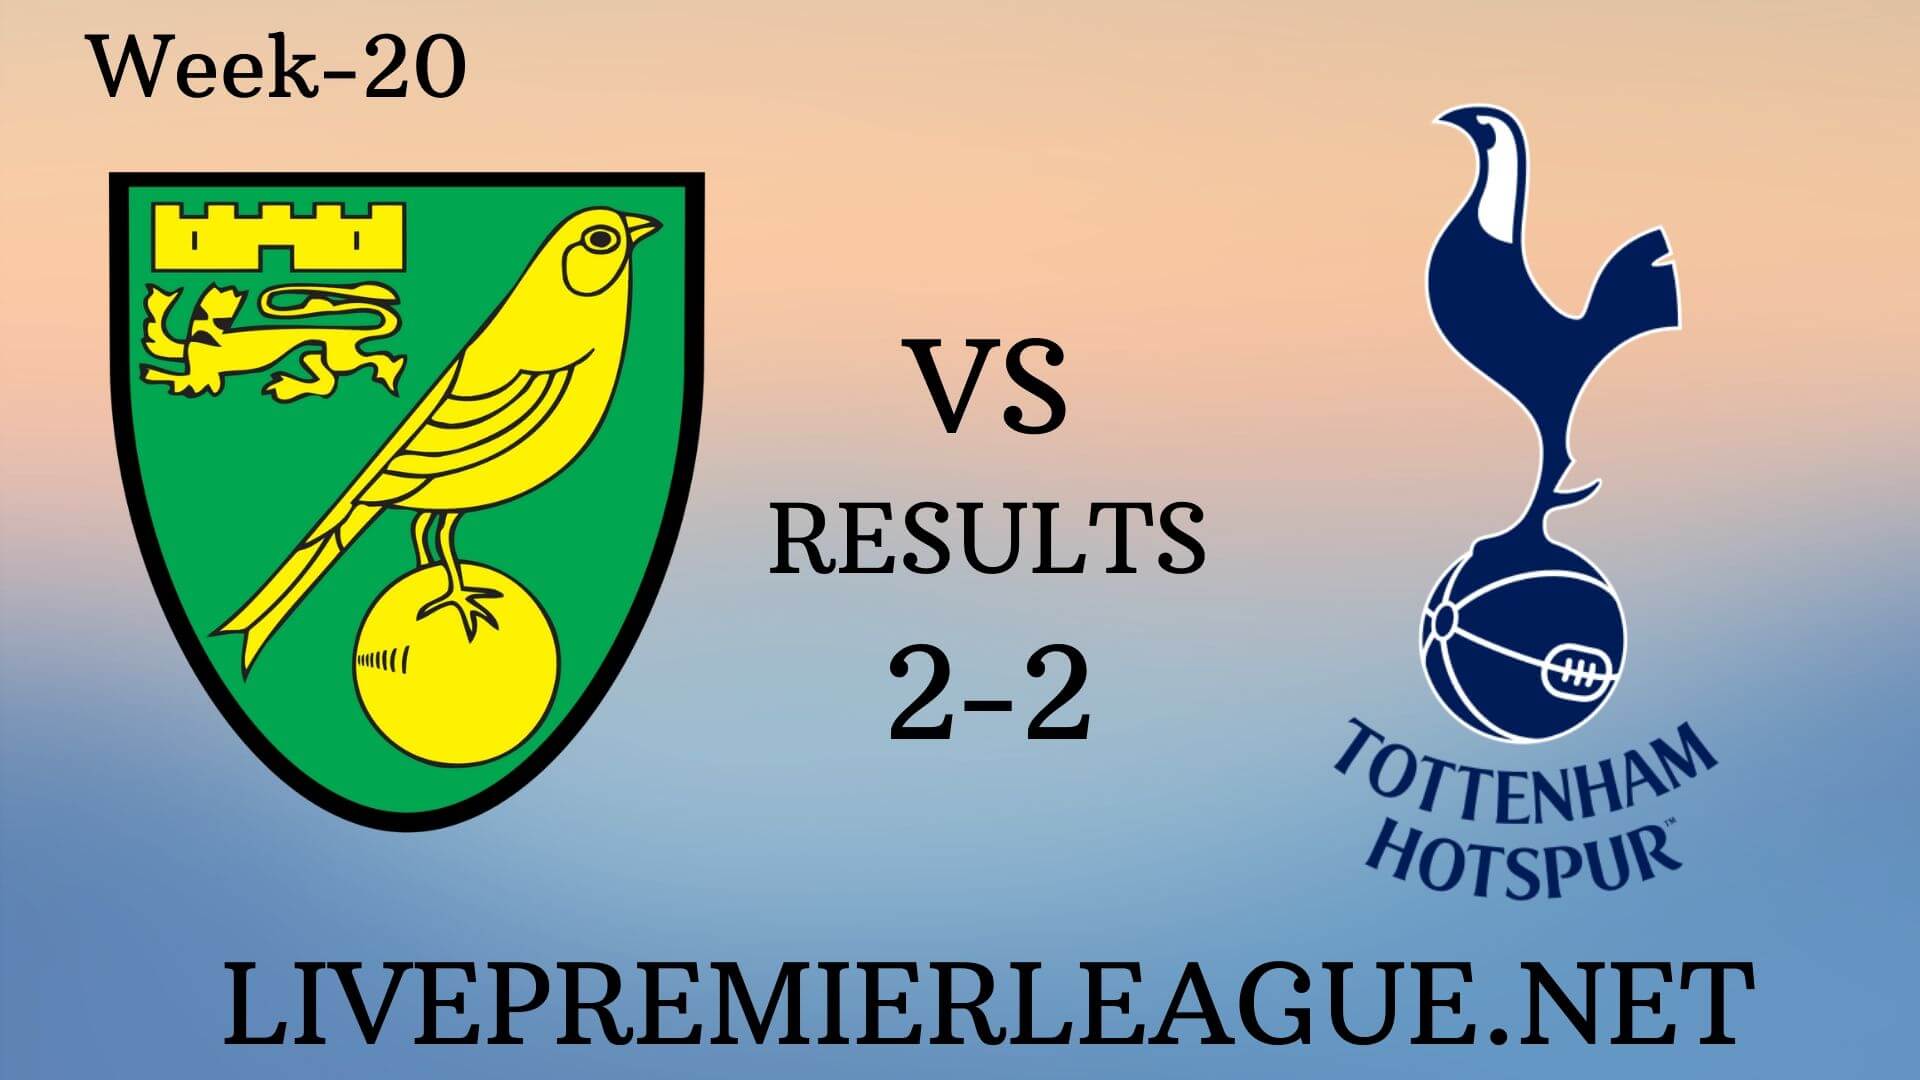 Norwich City Vs Tottenham Hotspur | Week 20 Results 2019